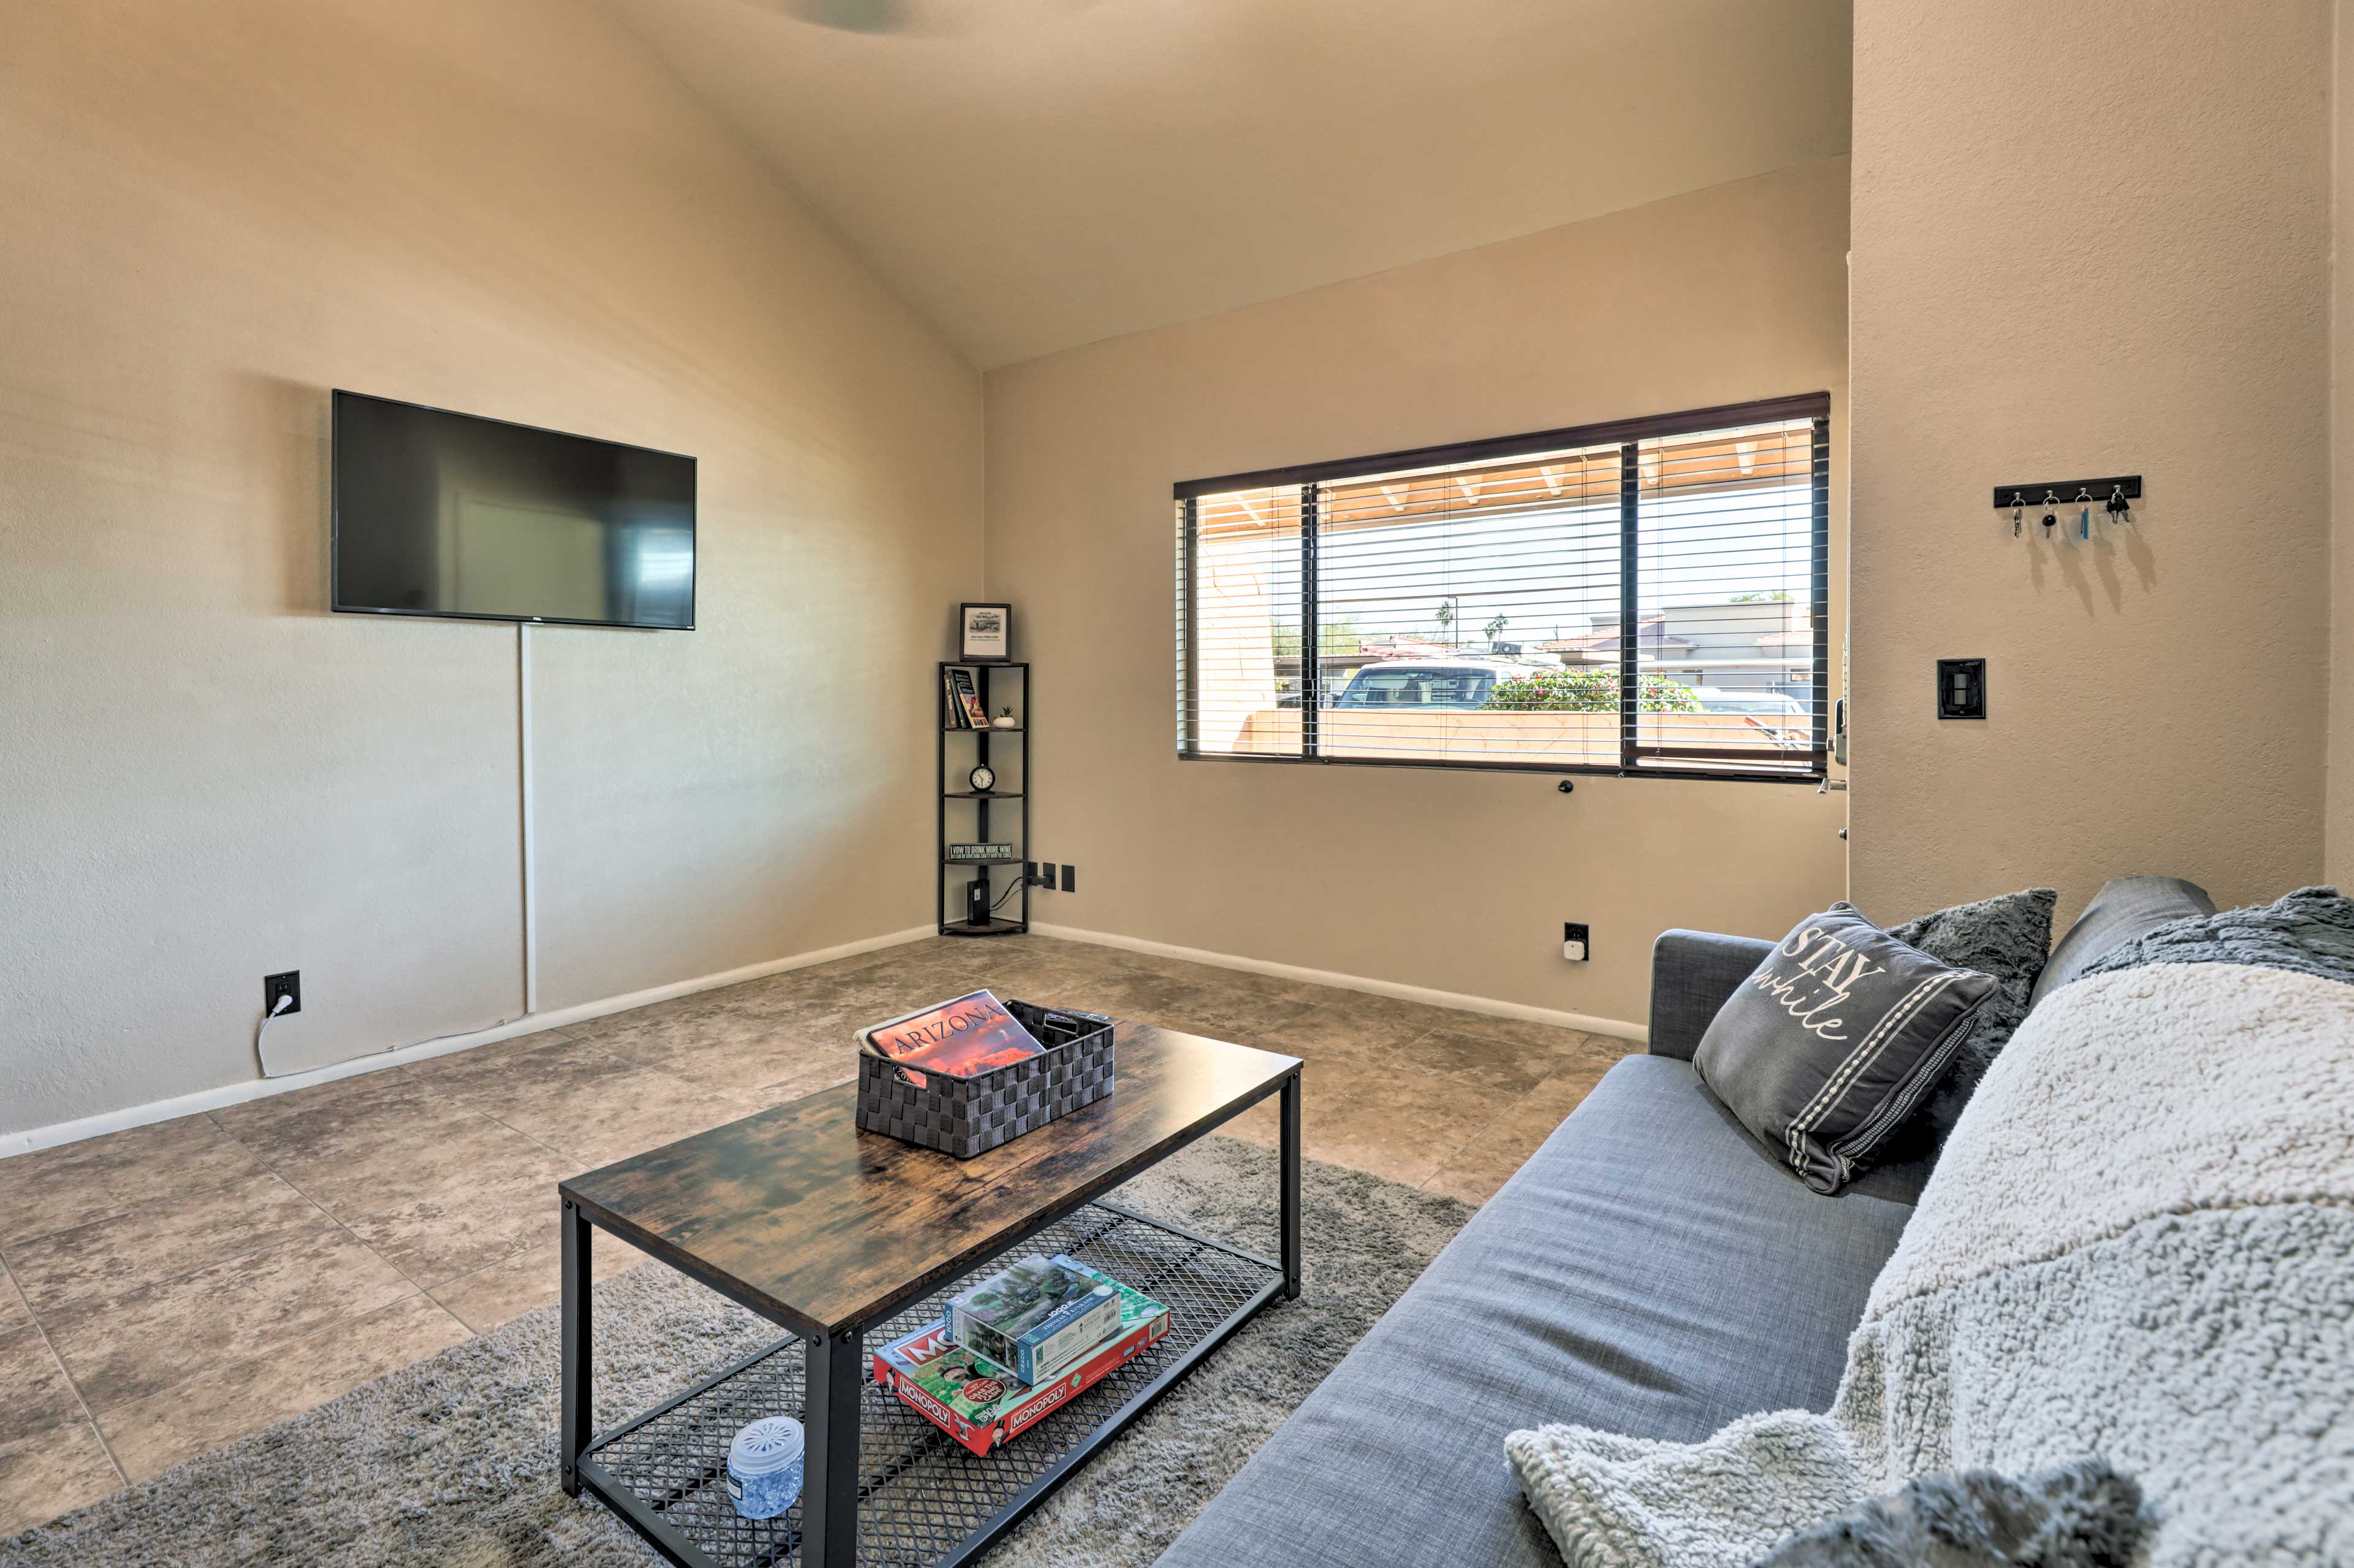 Living Room | Smart TV